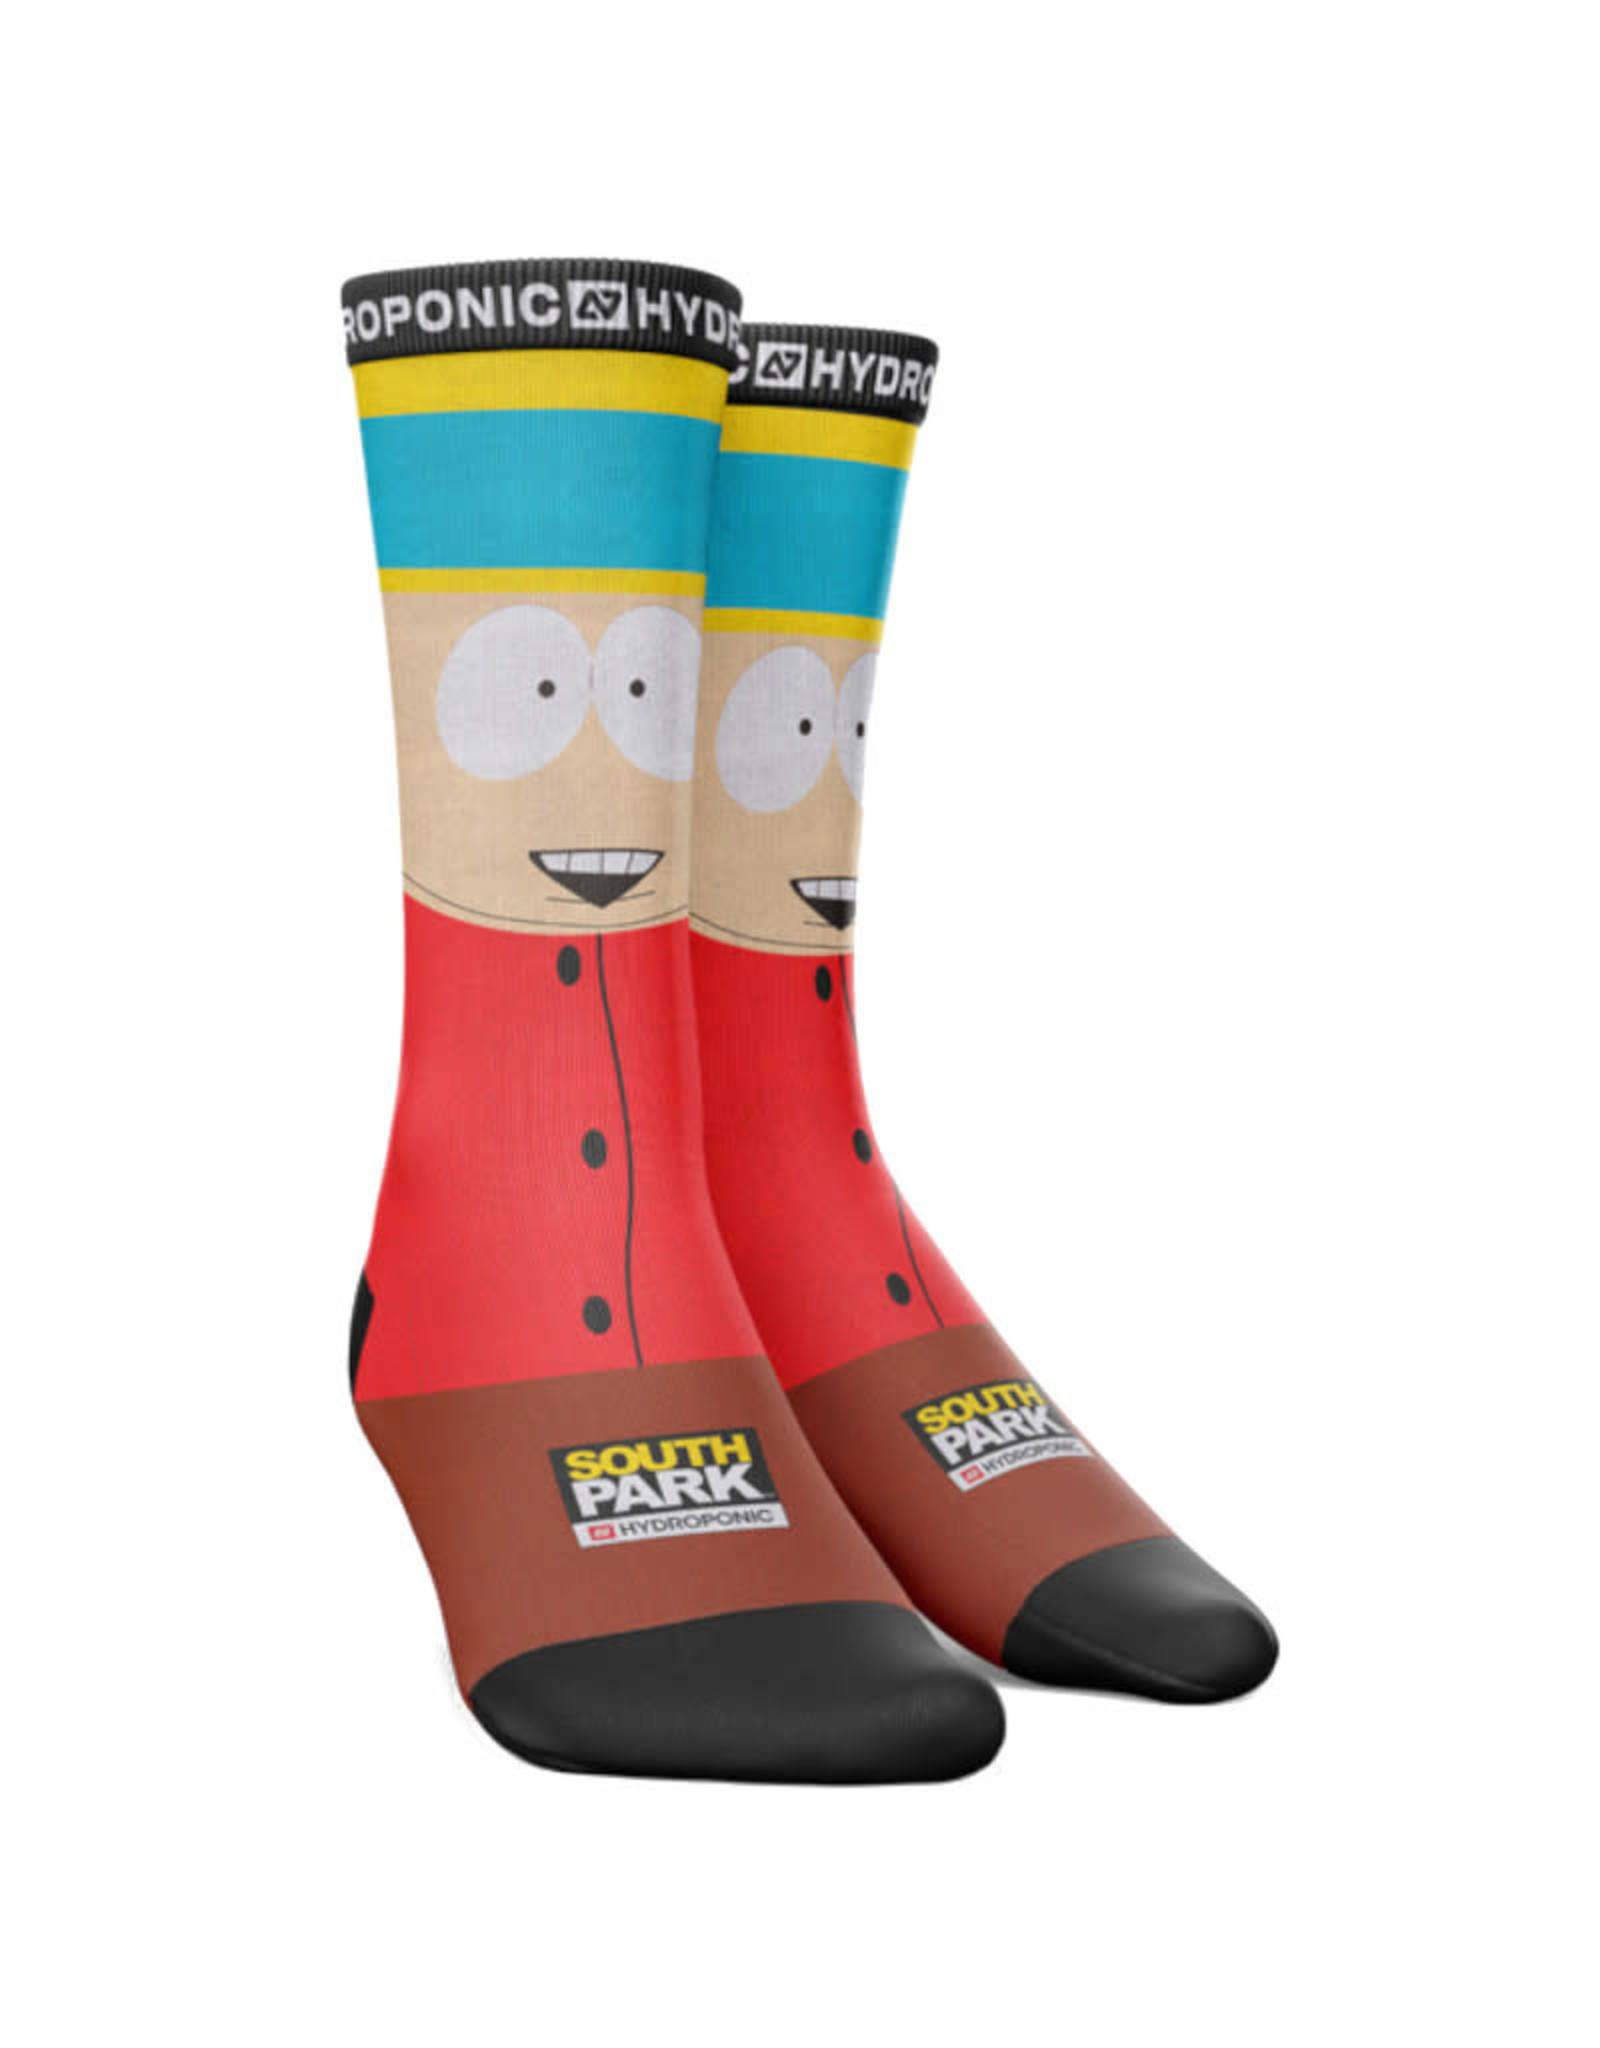 Hydroponic Hydroponic South Park Cartman Sock